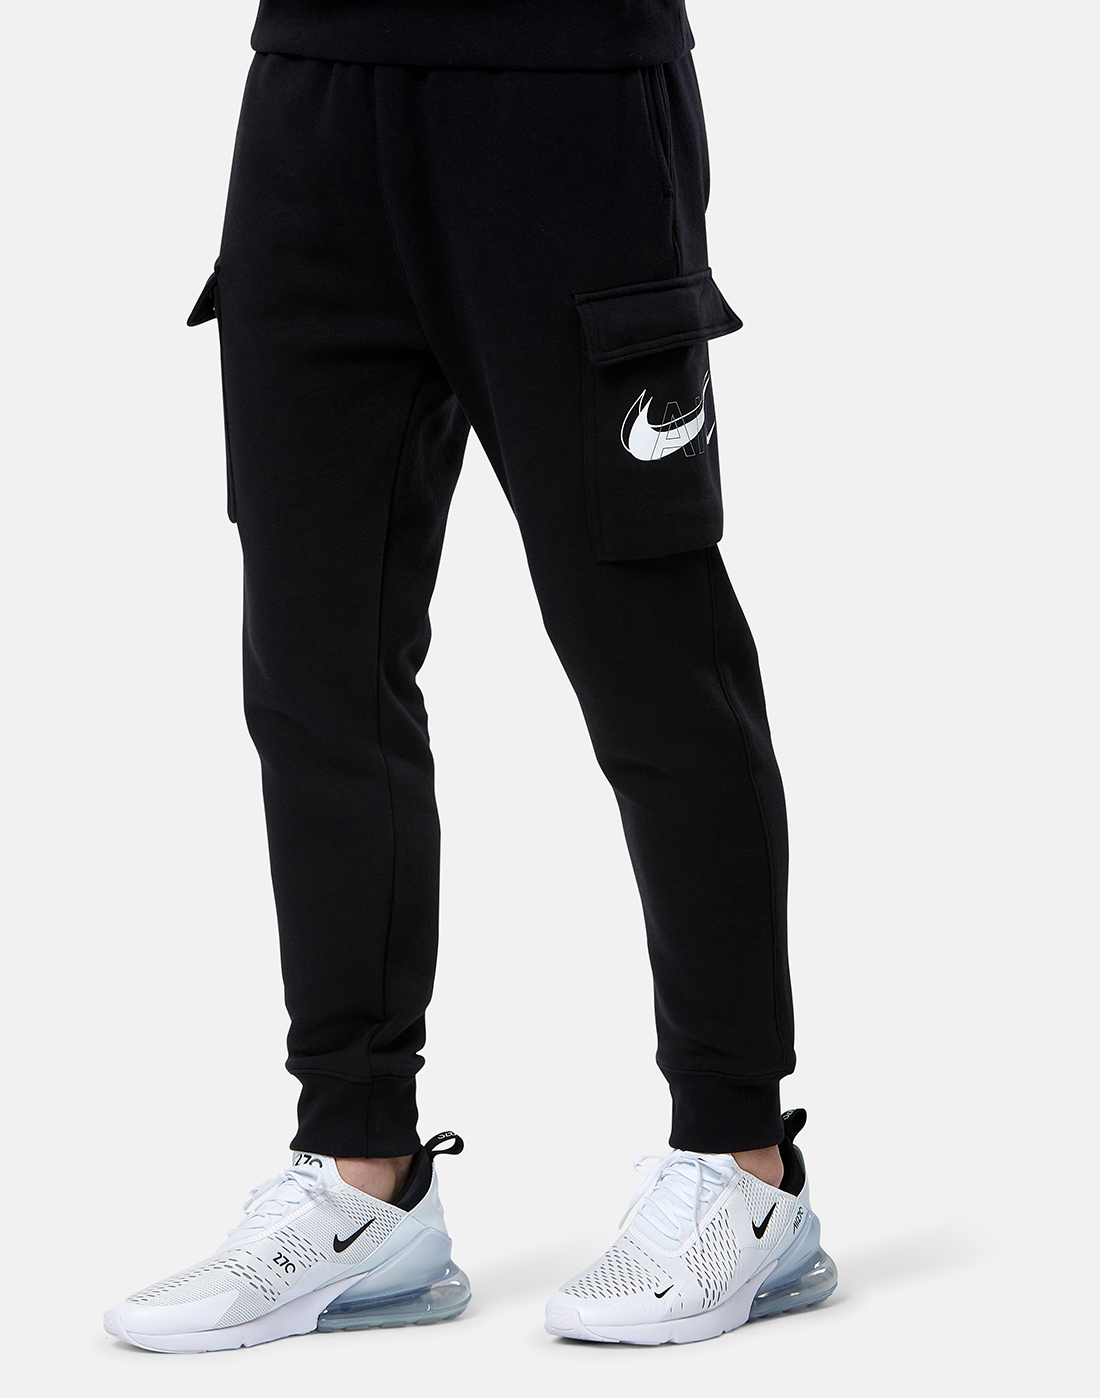 Nike Mens Air Print Cargo Pants - Black | Life Style Sports UK